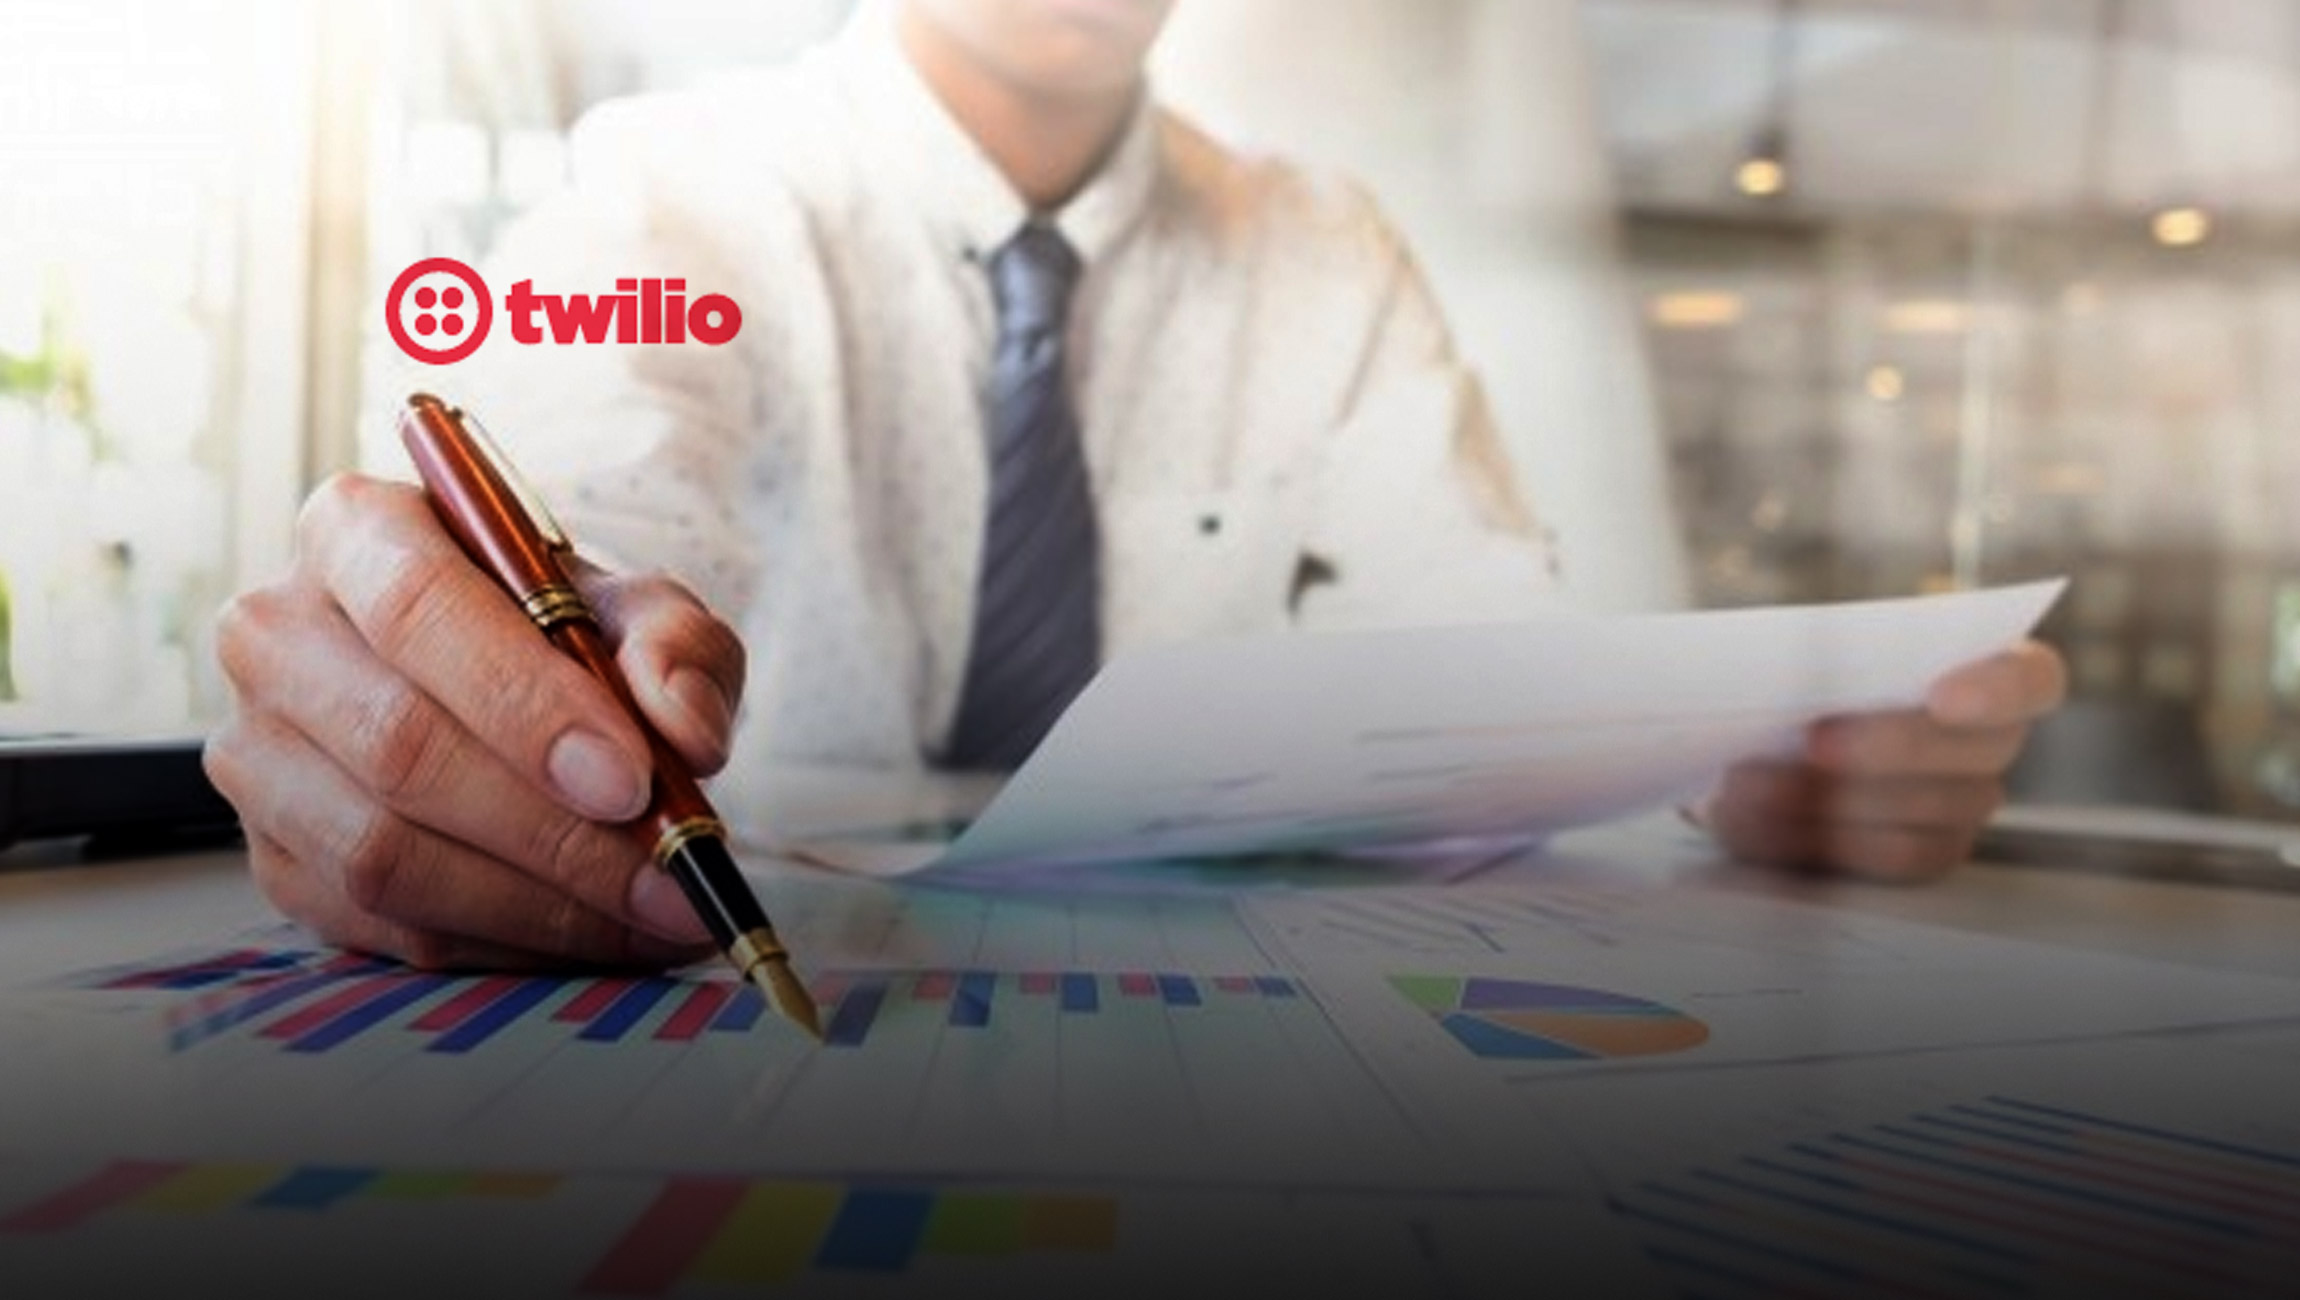 Twilio Completes Acquisition of Segment, the Market-leading Customer Data Platform